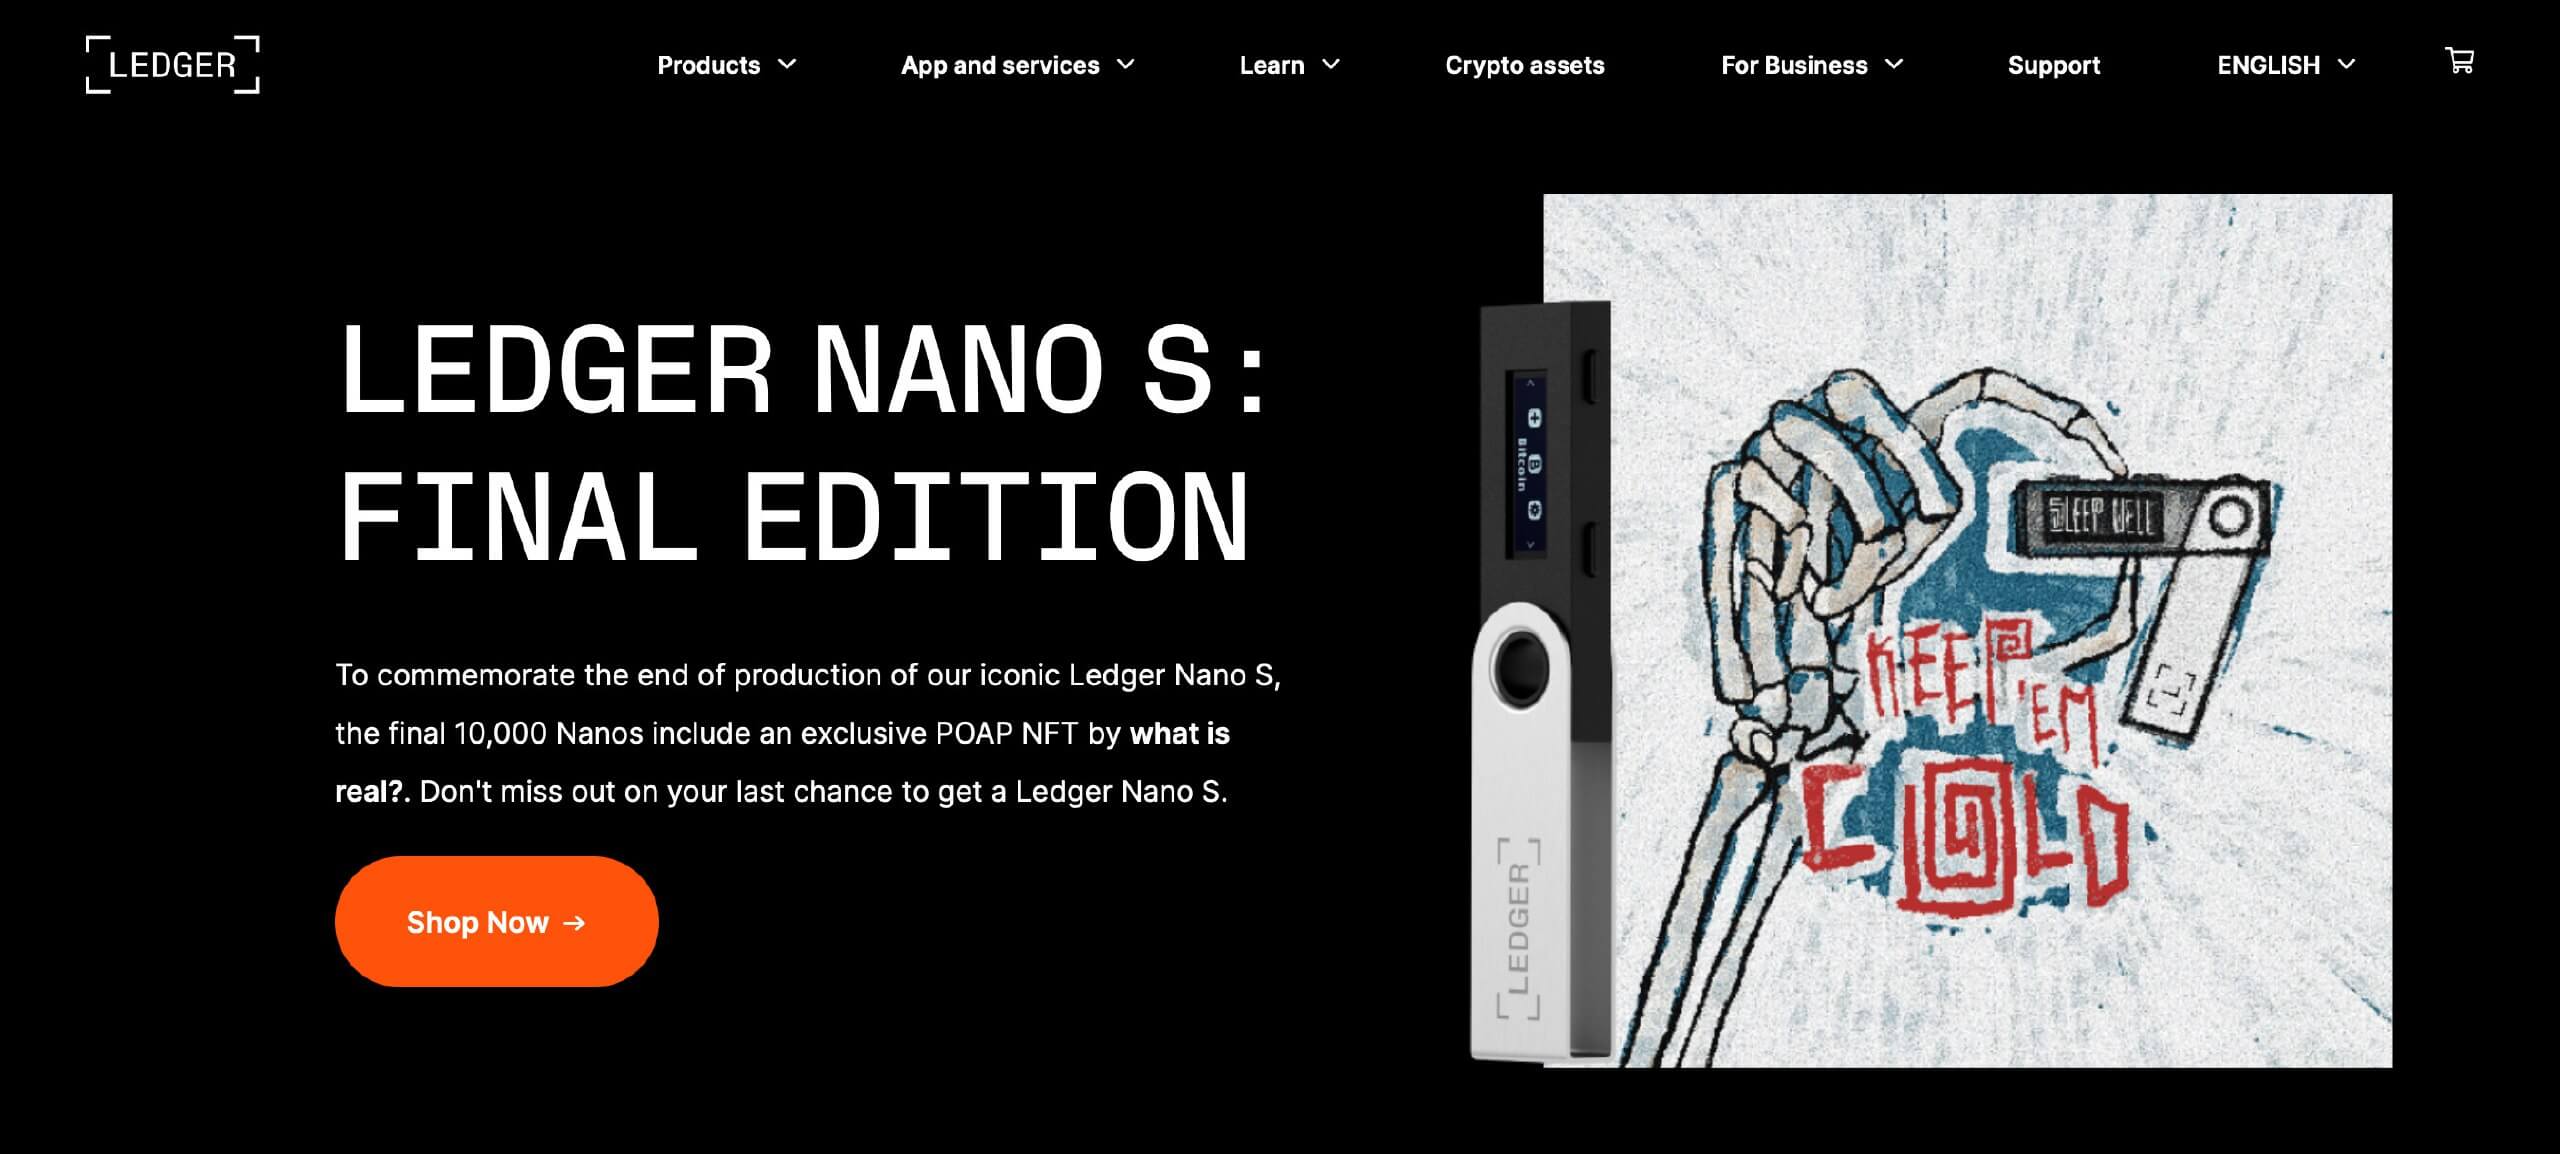 Характеристики Ledger Nano S Plus. Анонс заключительной коллекции Ledger Nano S. Фото.